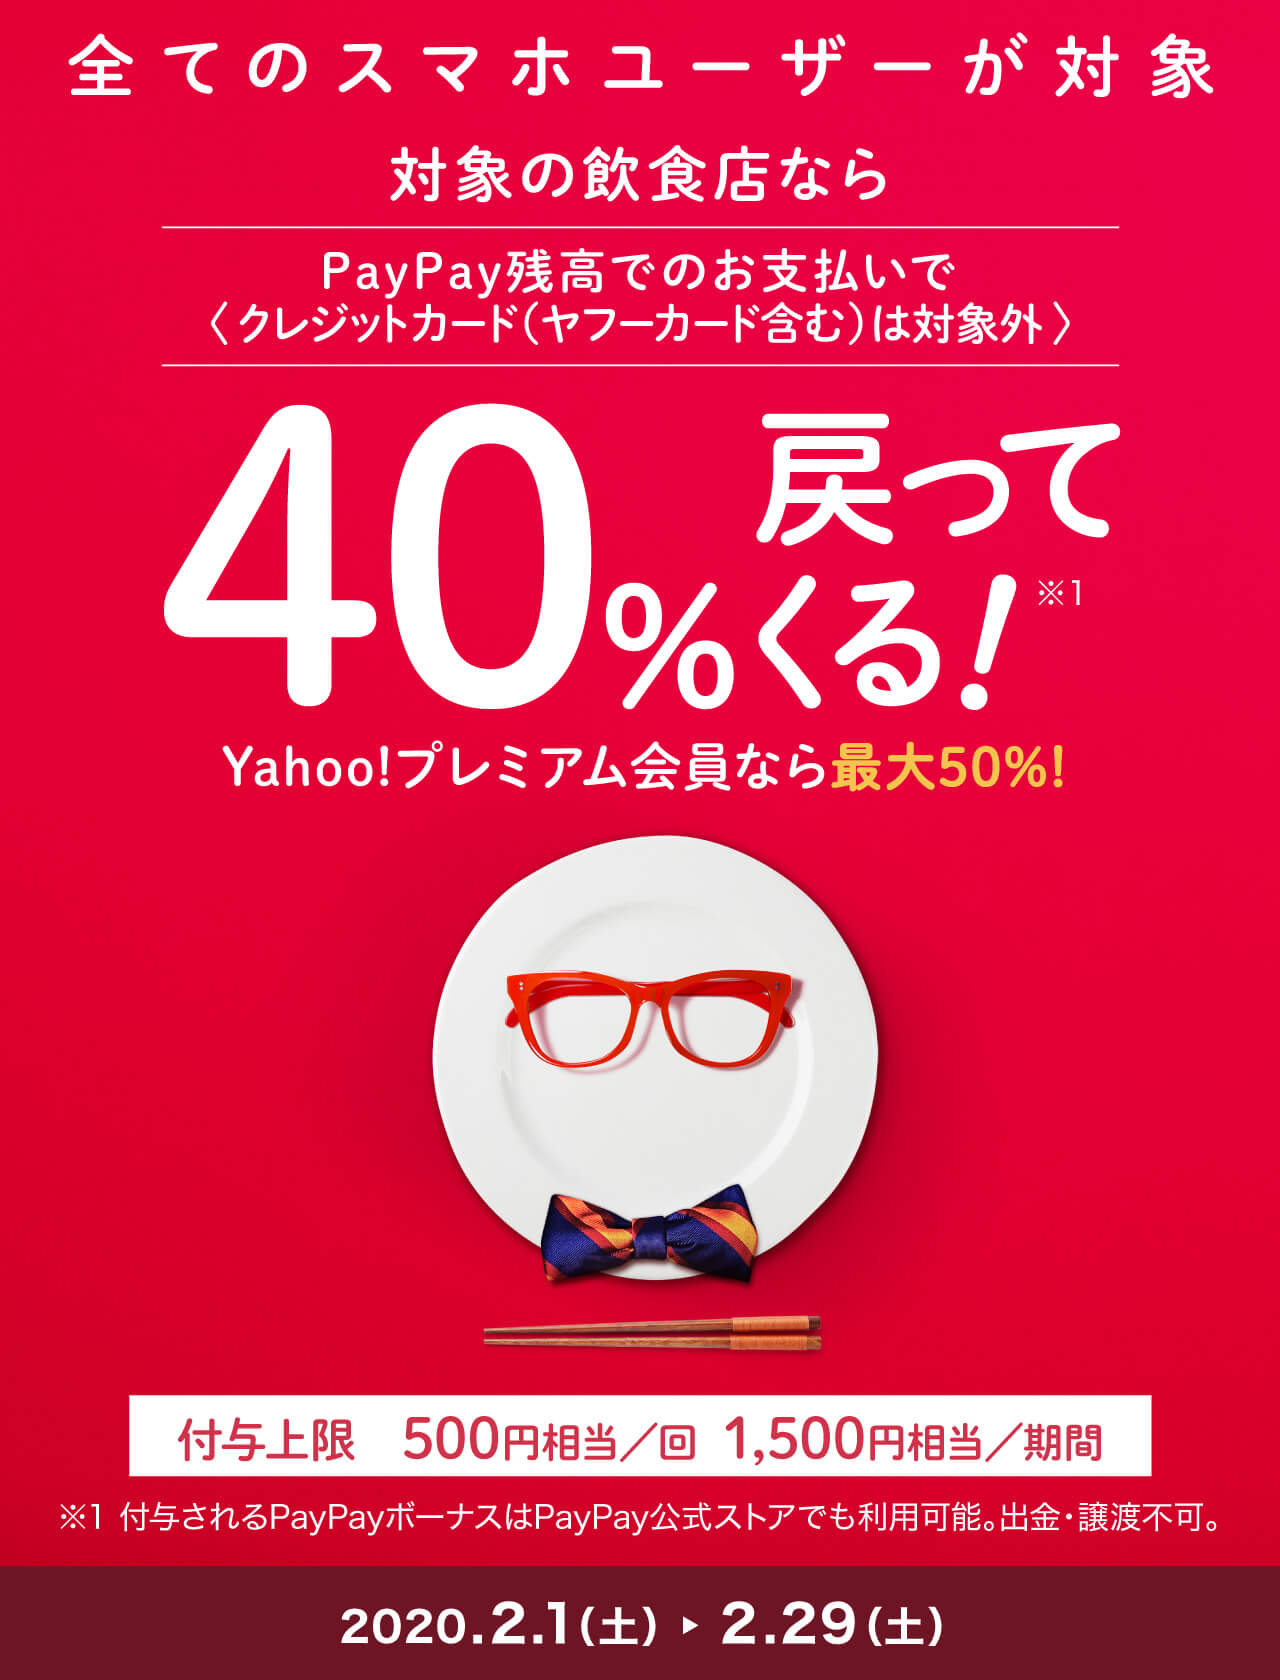 PayPay_40%還元